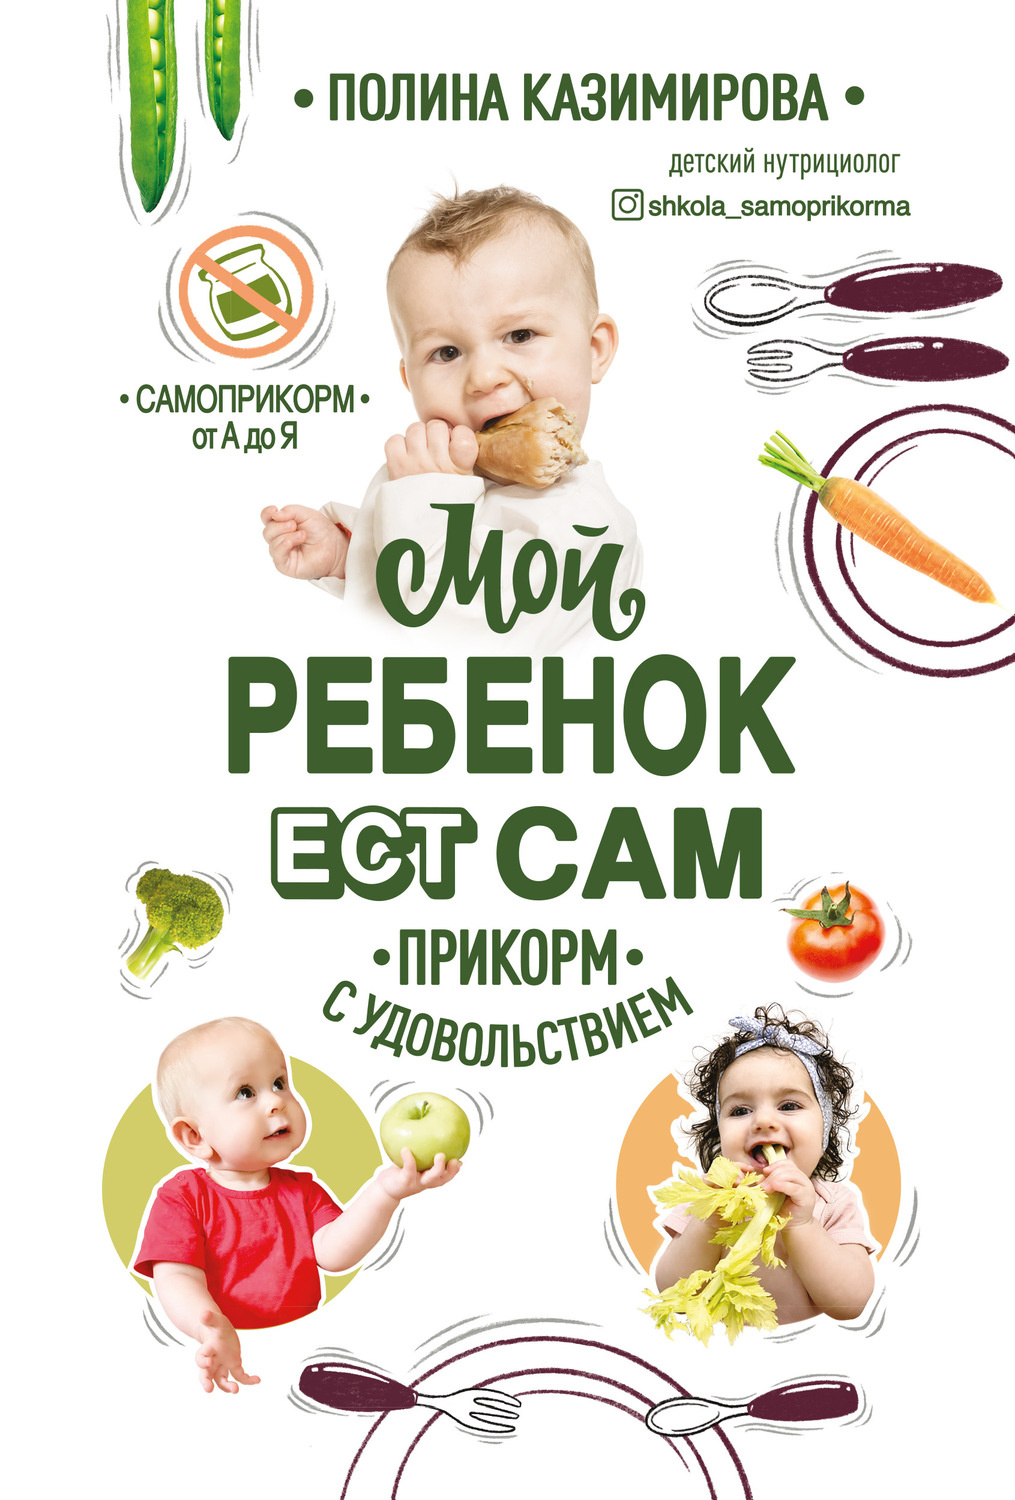 Мой ребёнок ест сам. Прикорм с удовольствием. Автор — Поліна Казімірова. 